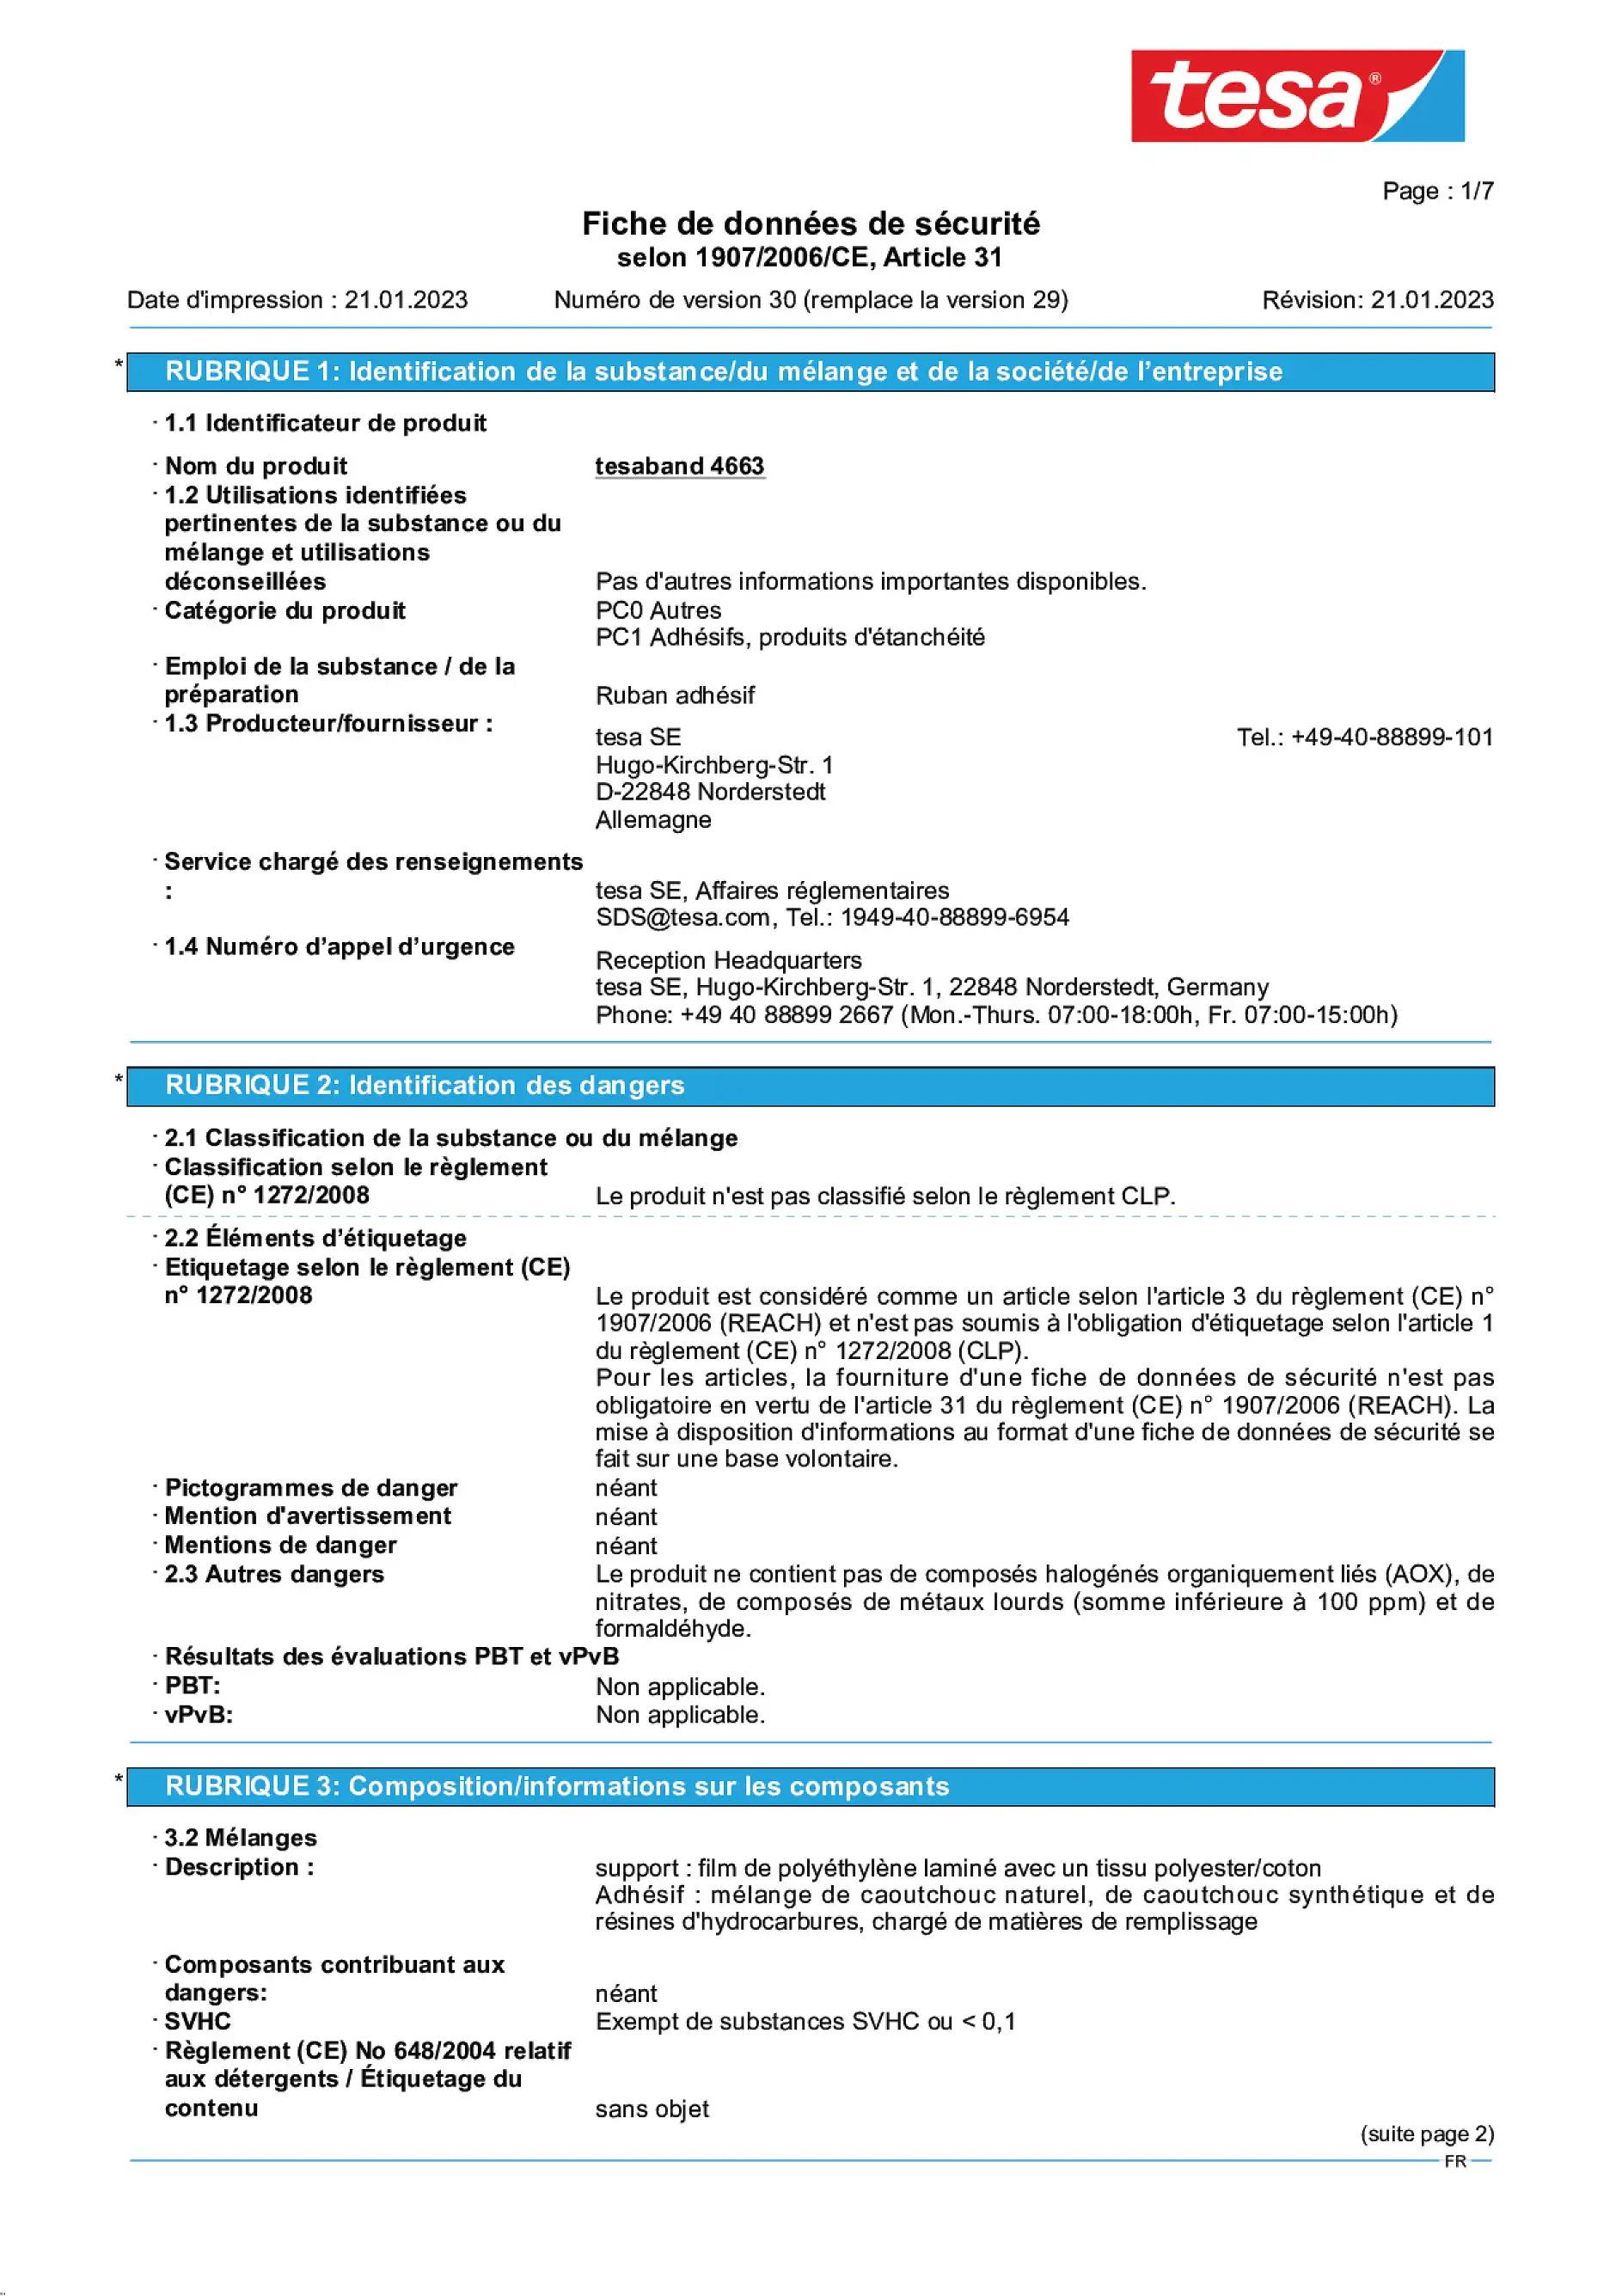 Safety data sheet_tesa® Professional 04663_fr-FR_v30